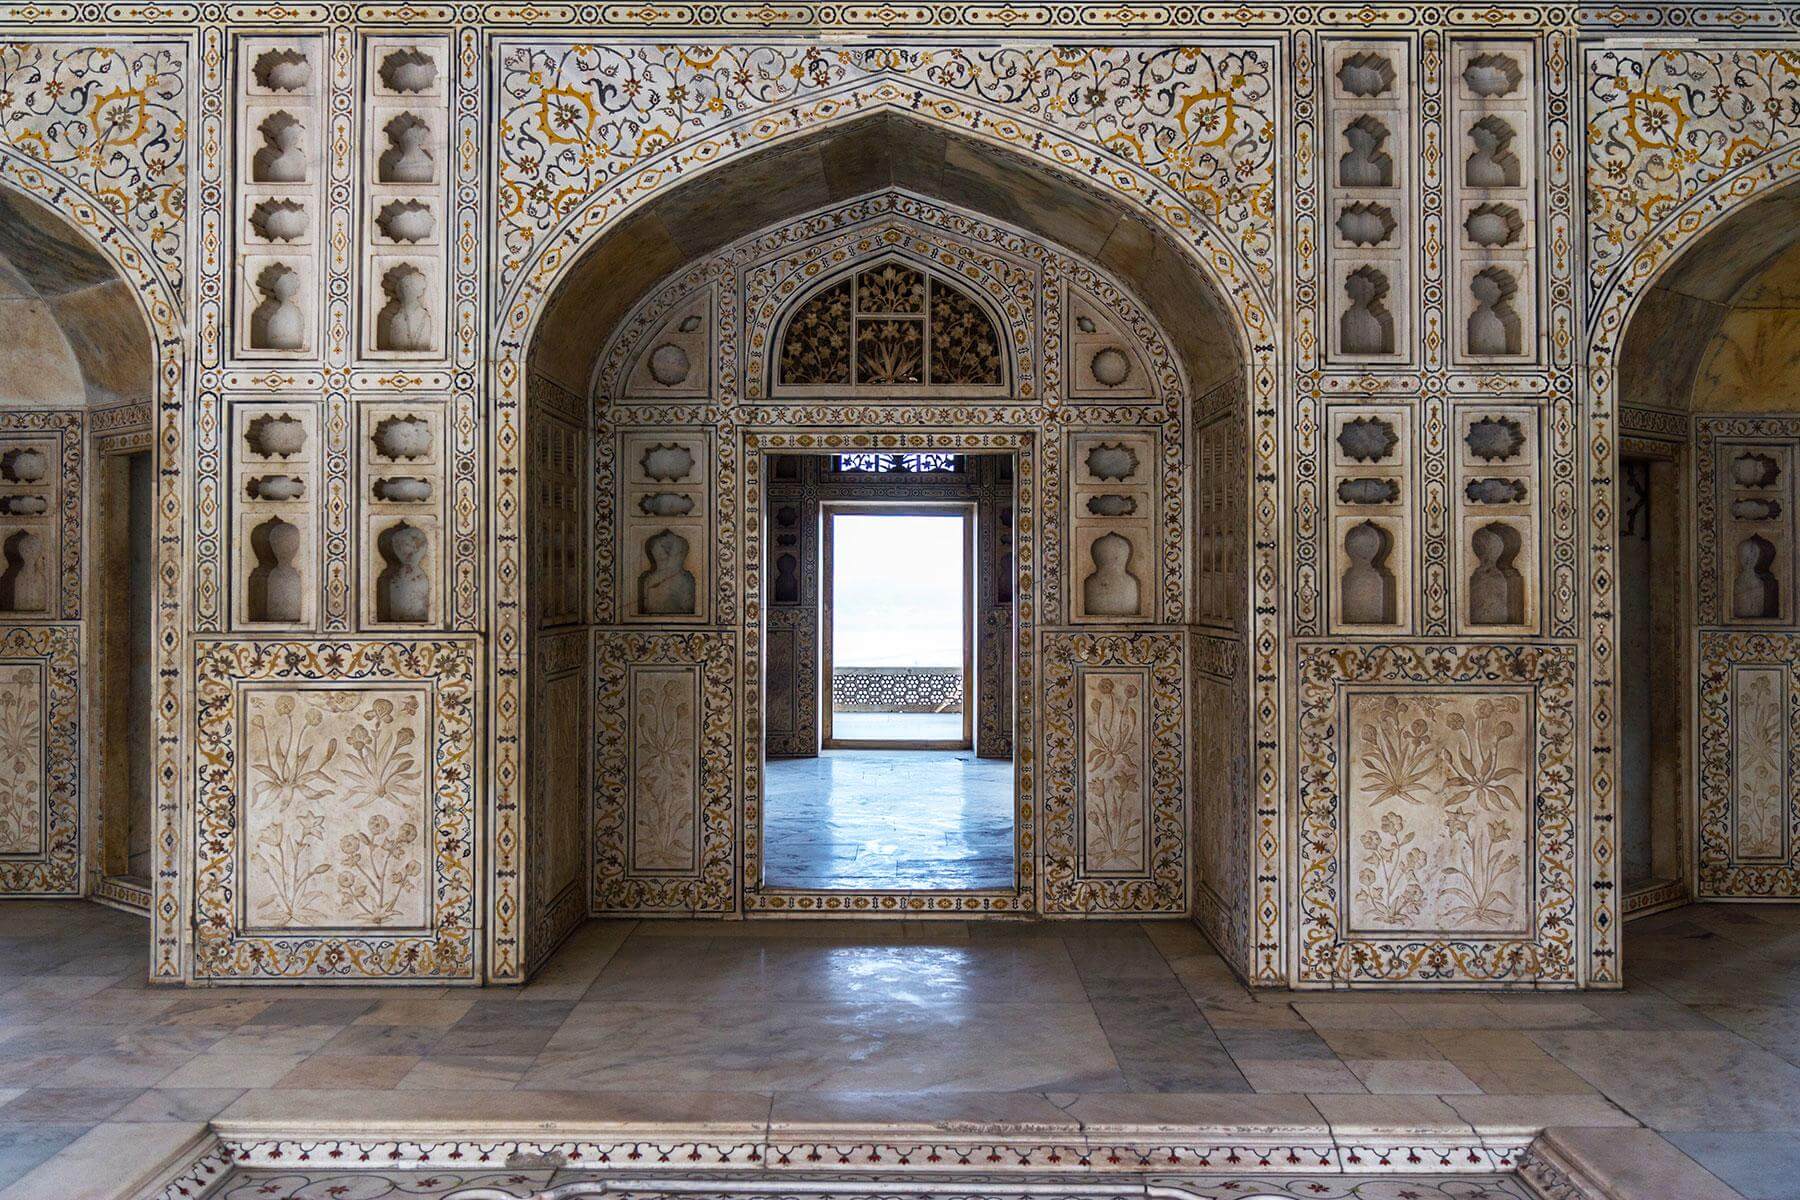 Inside View of the Taj Mahal